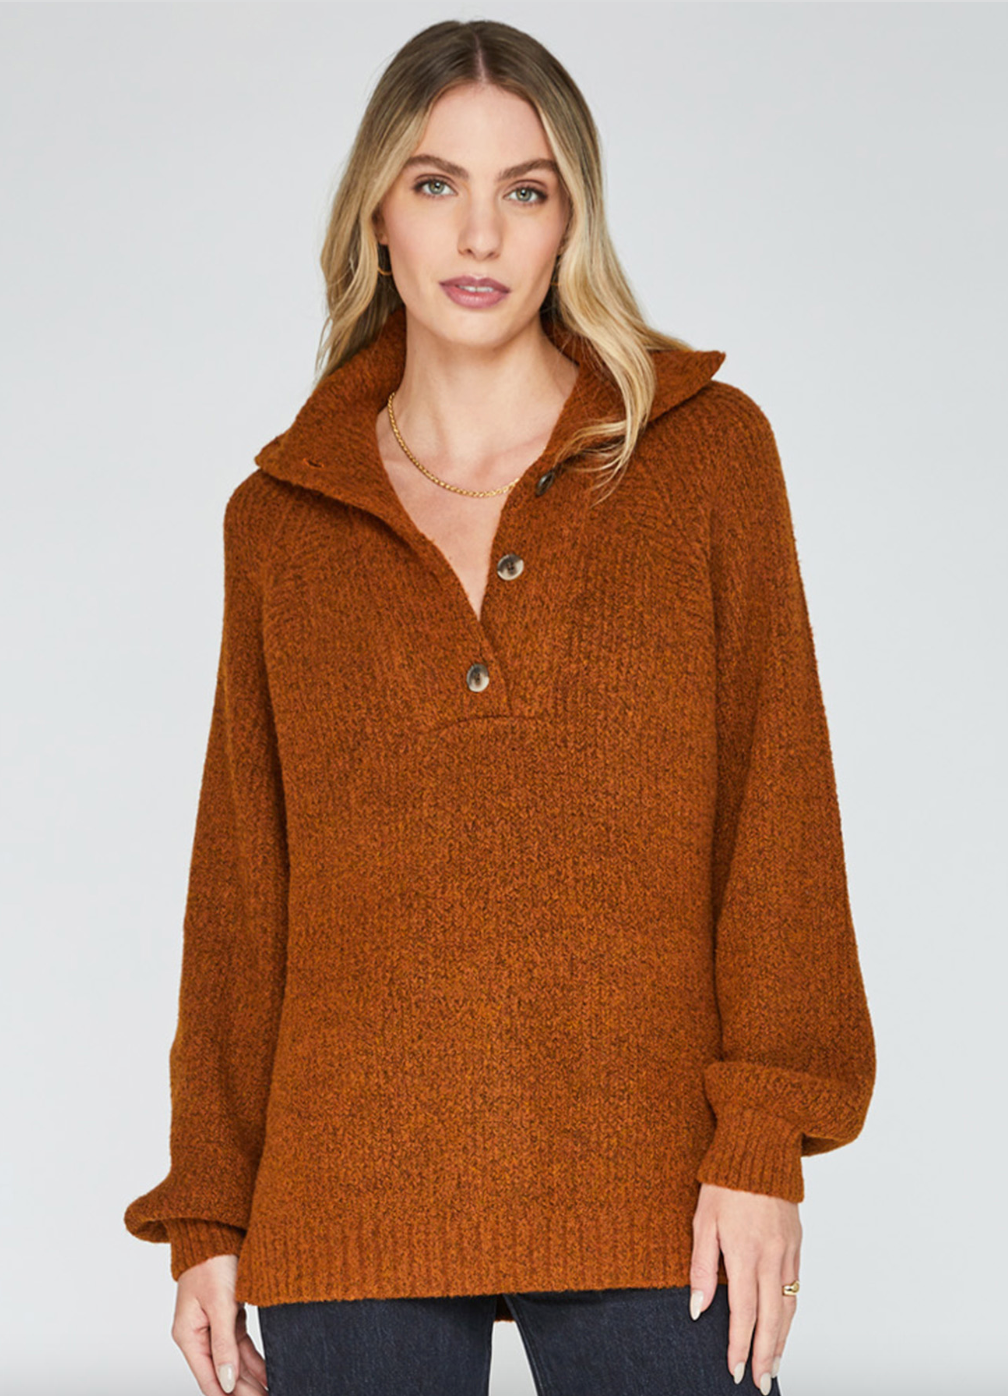 Alden Sweater